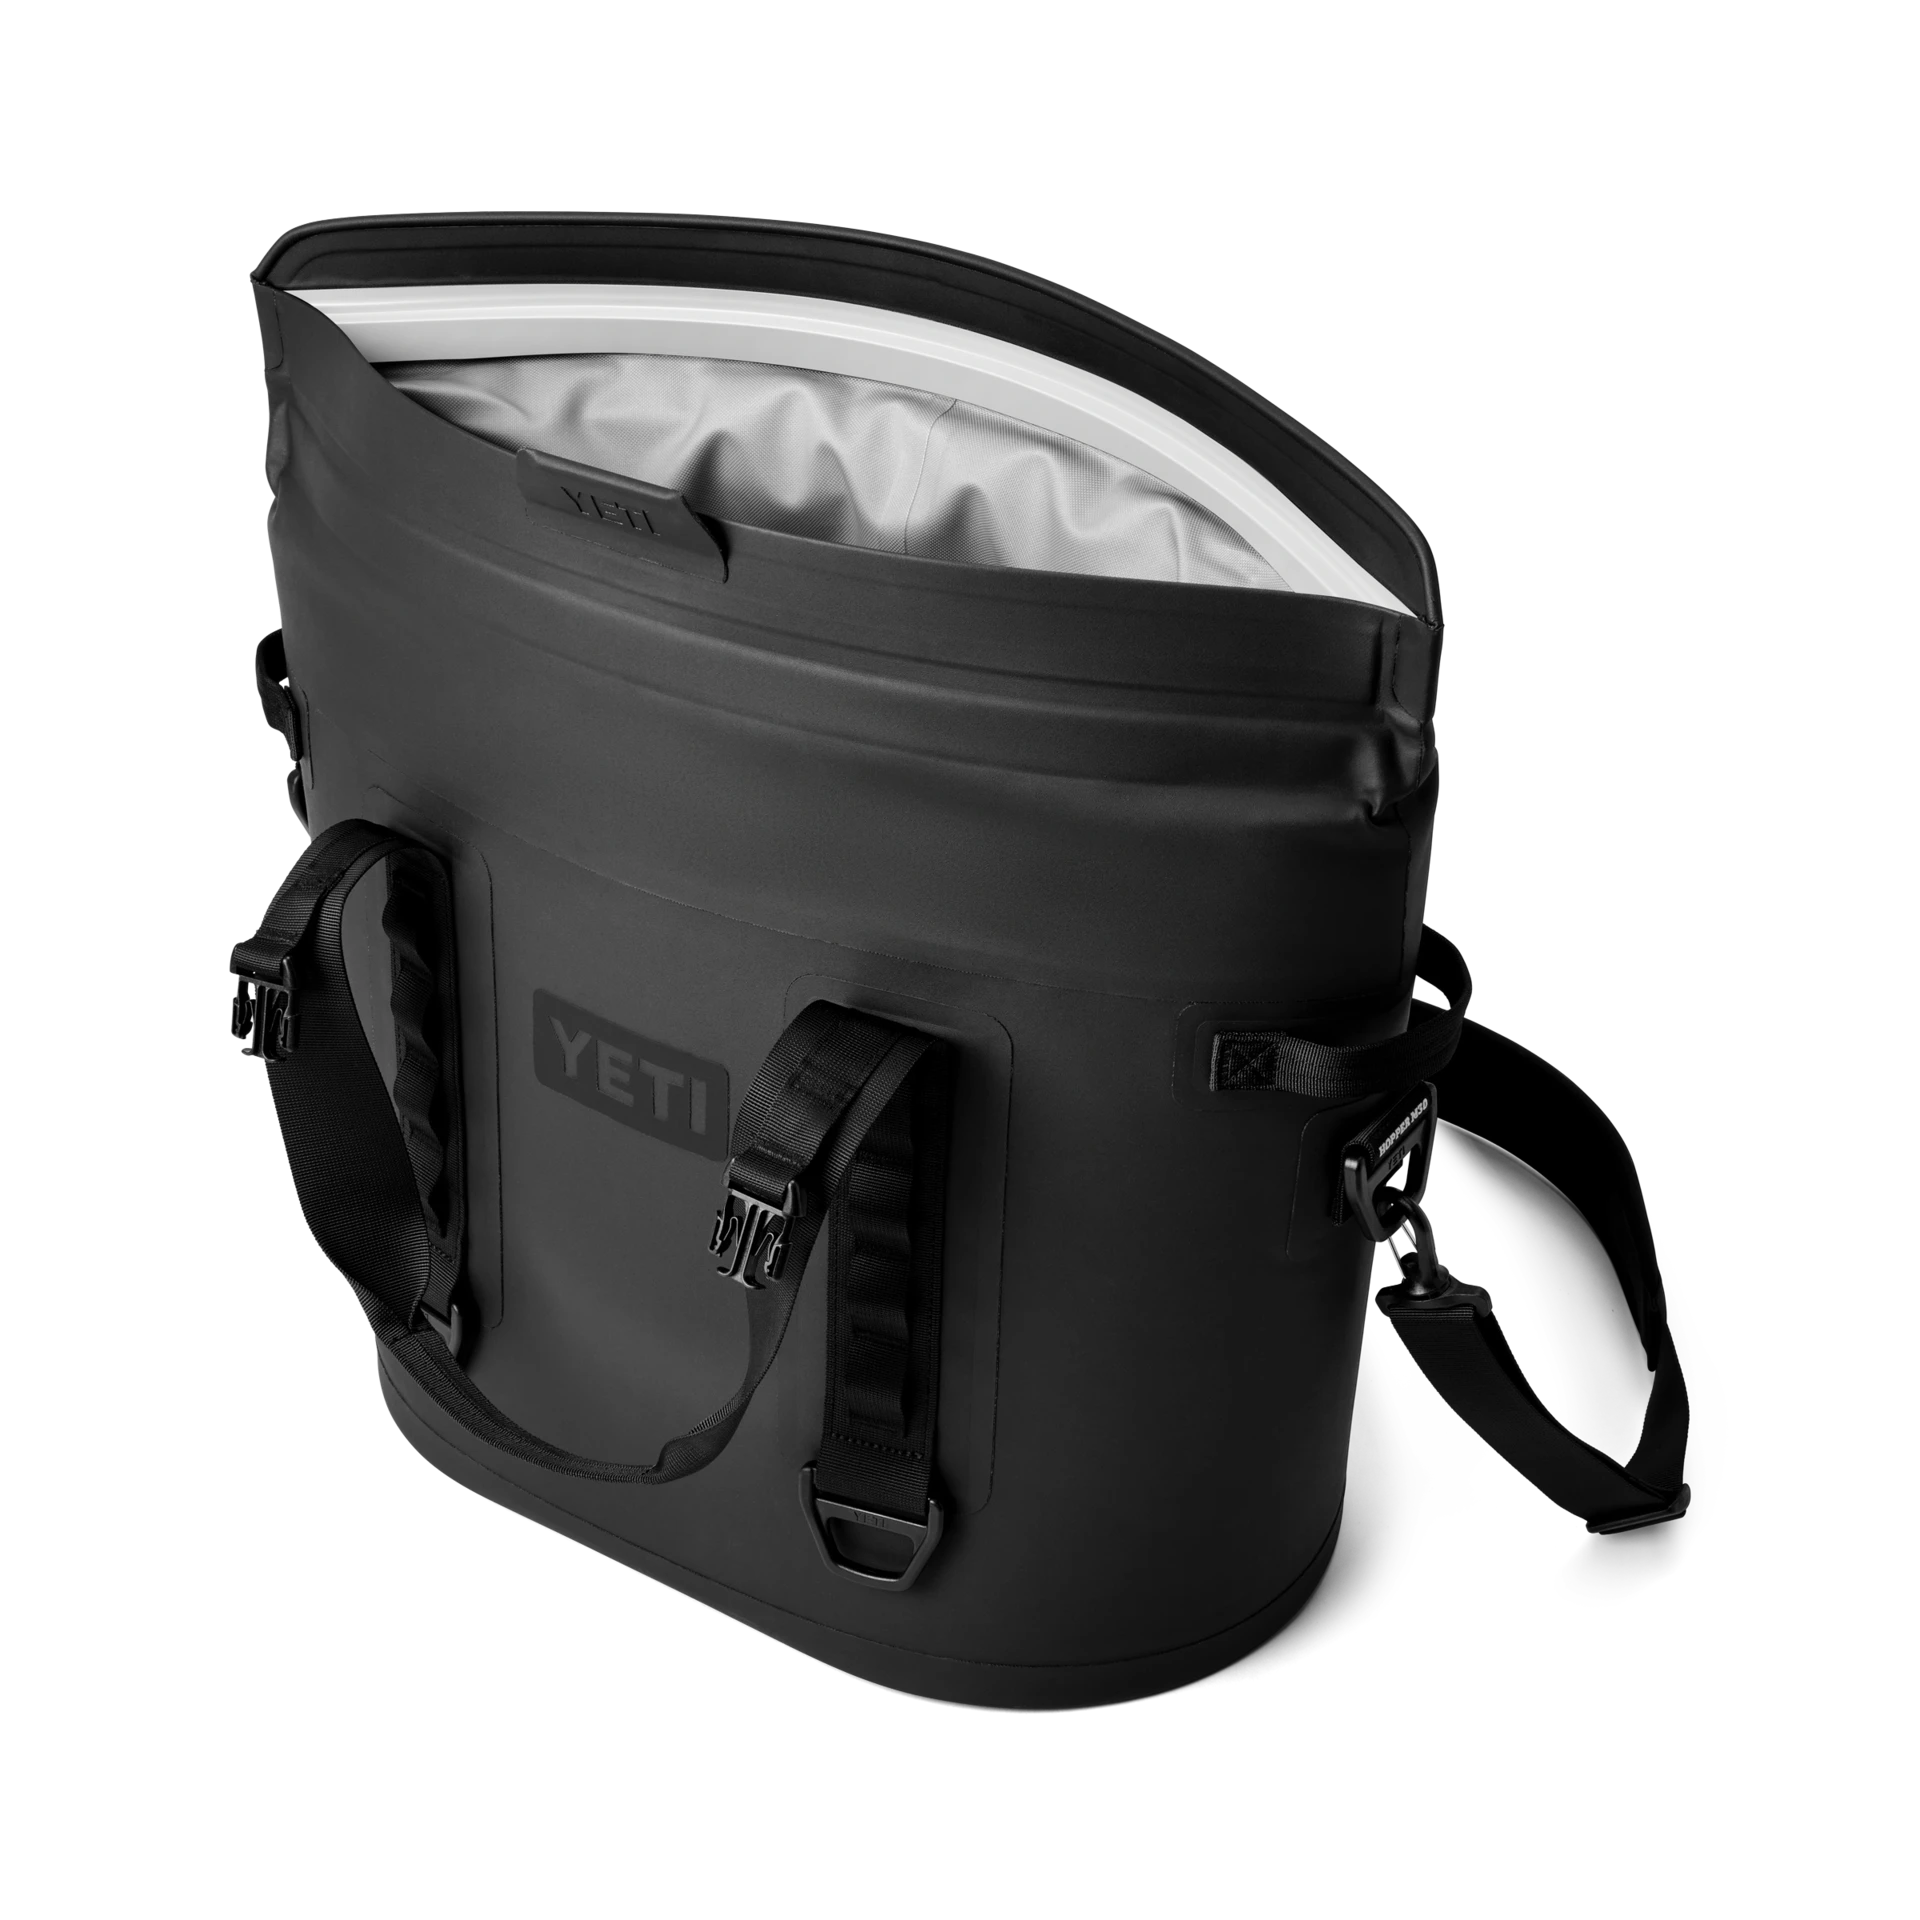 YETI- Hopper M30 Soft Cooler in Black